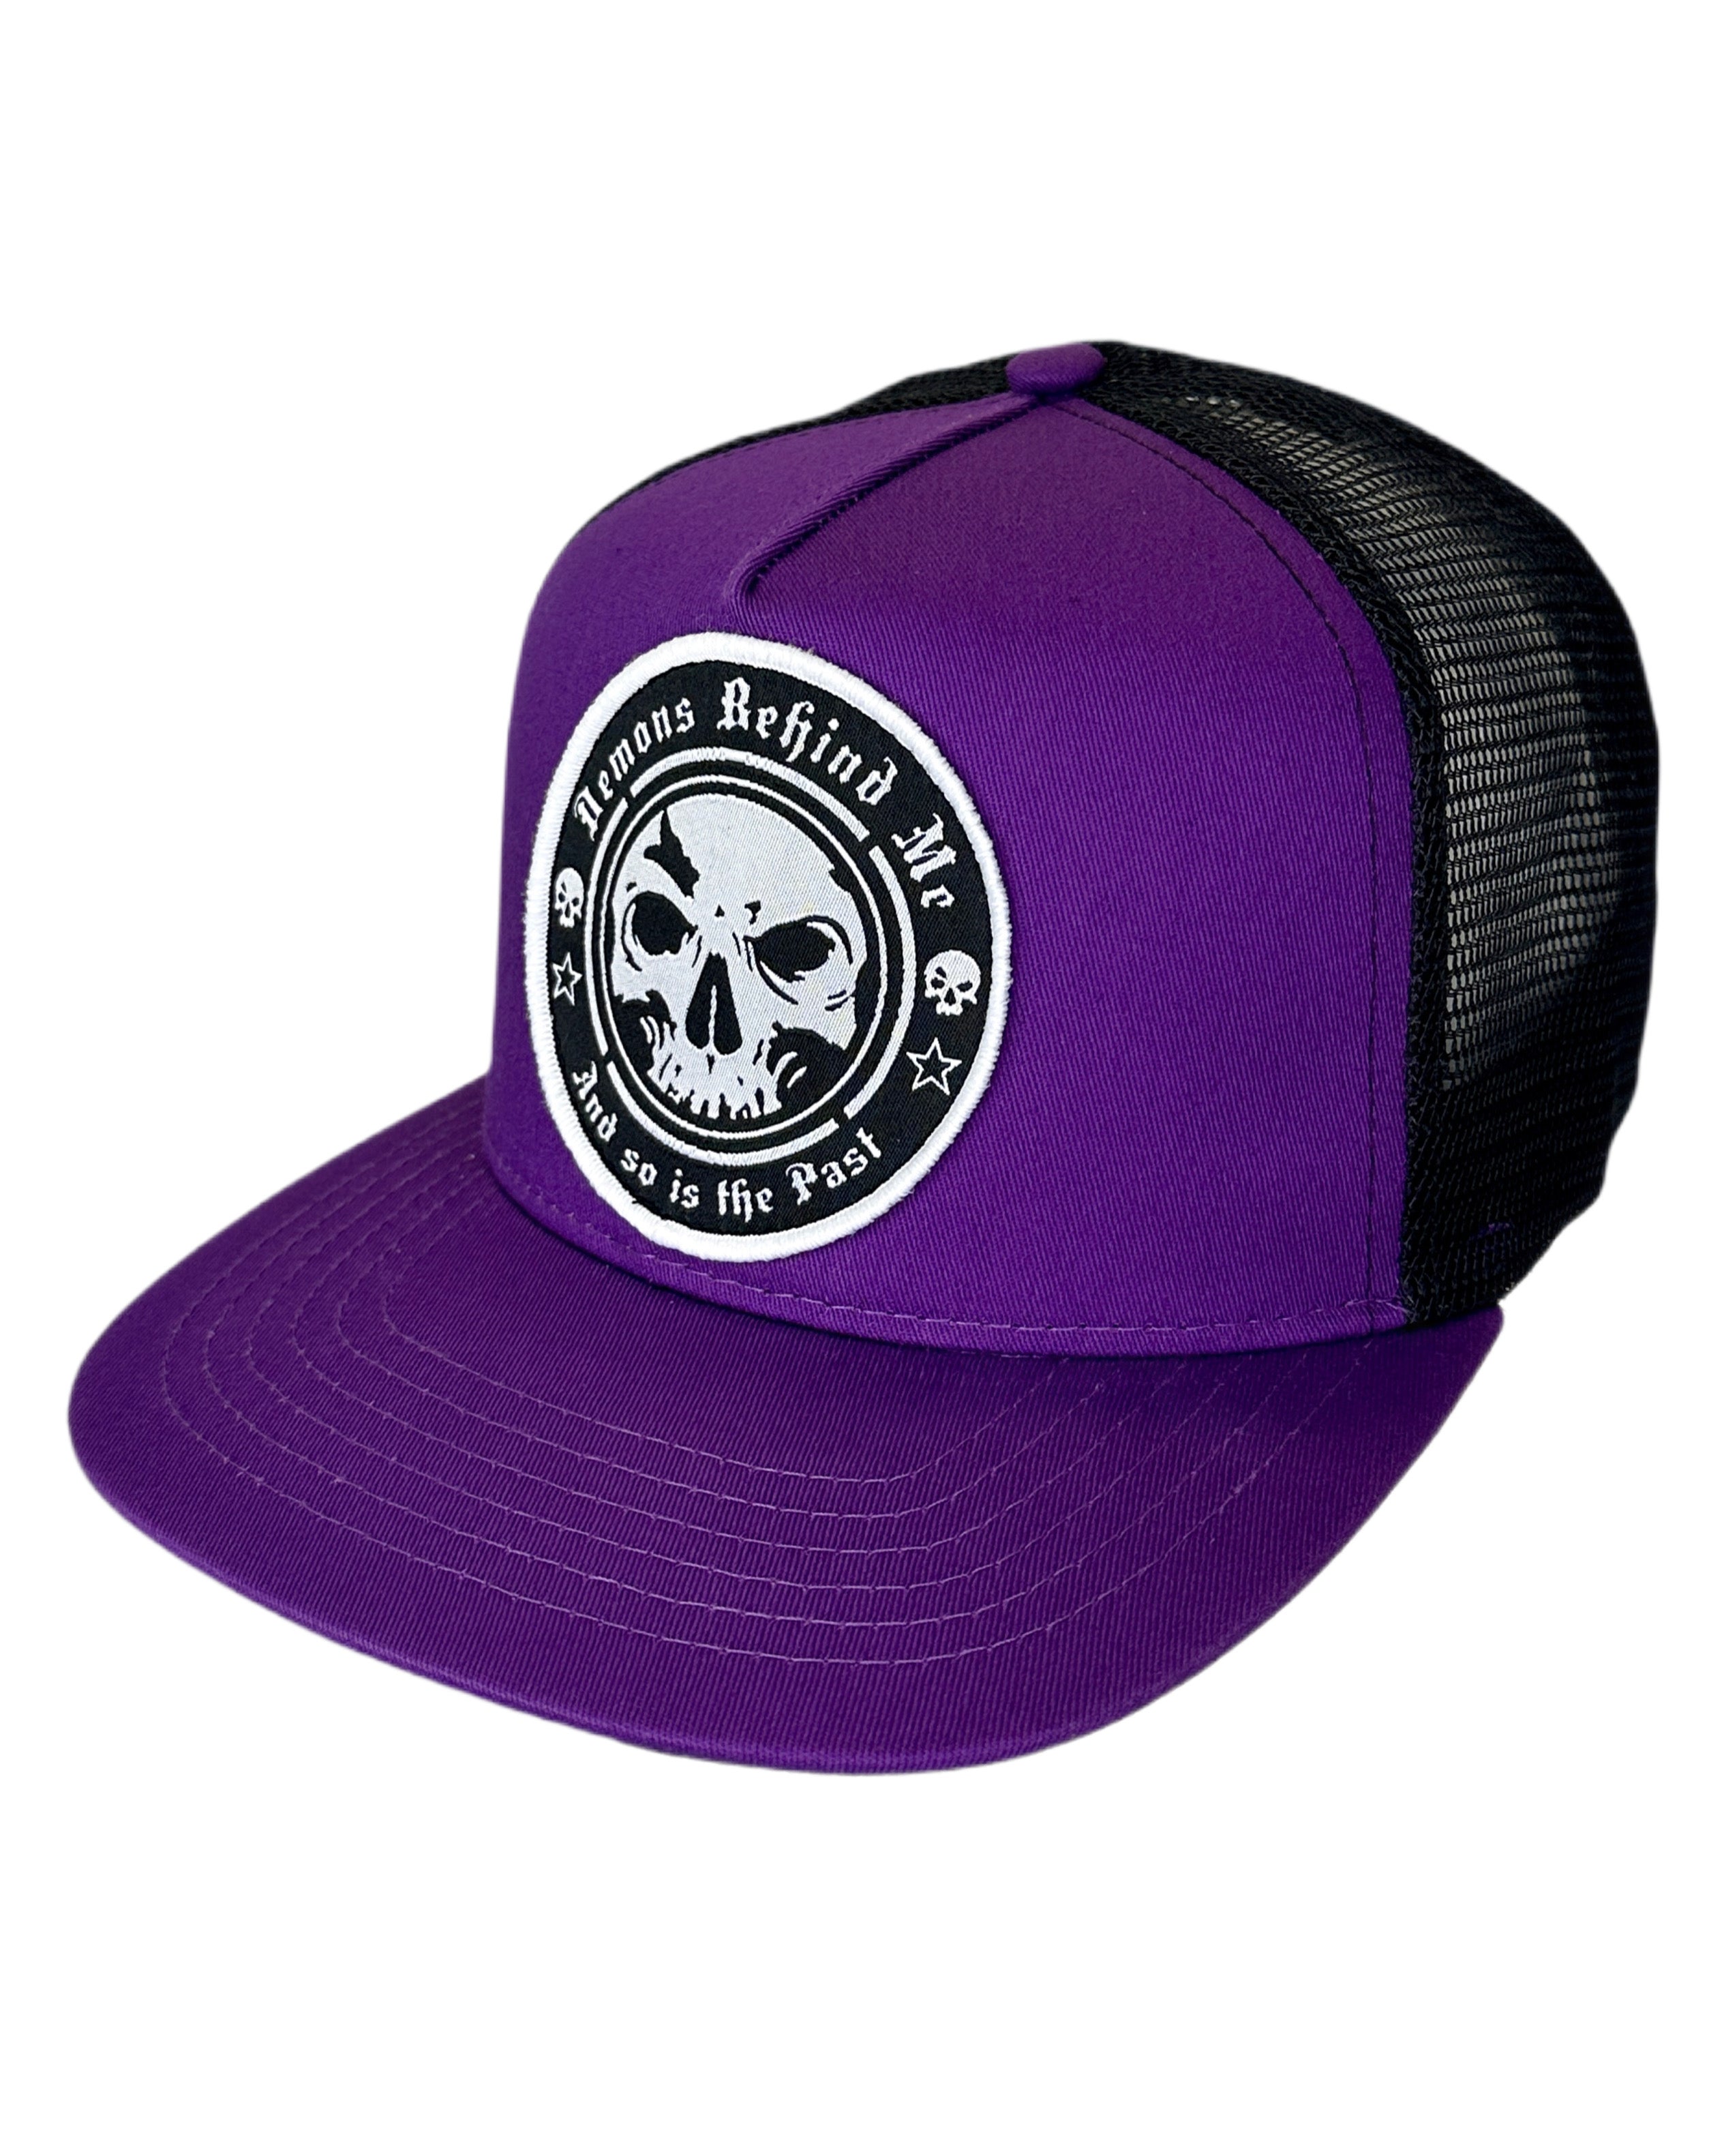 NEW! Purple & Black Classic Patch Circle Skull Trucker Hat